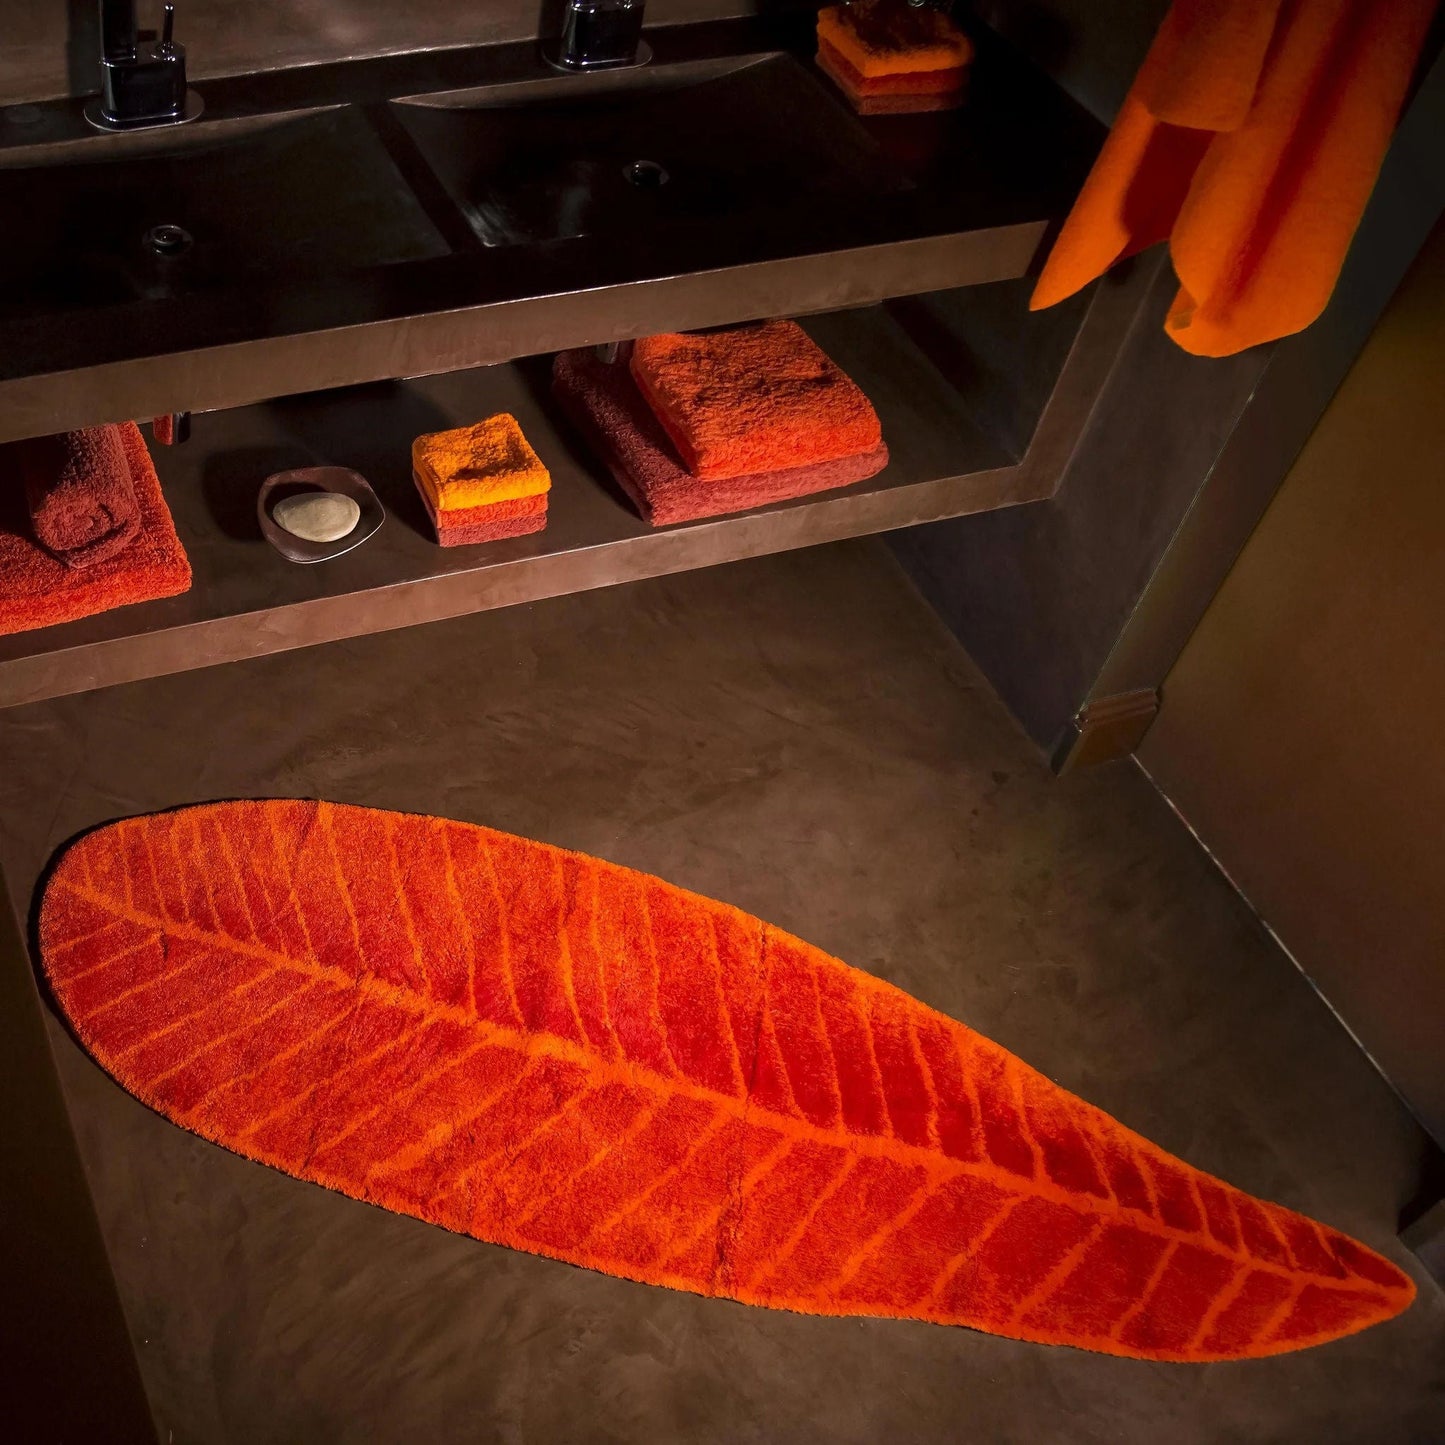 FEUILLE Luxury Leaf Design Bathroom Rug / Flame color - |VESIMI Design| Luxury and Rustic bathrooms online